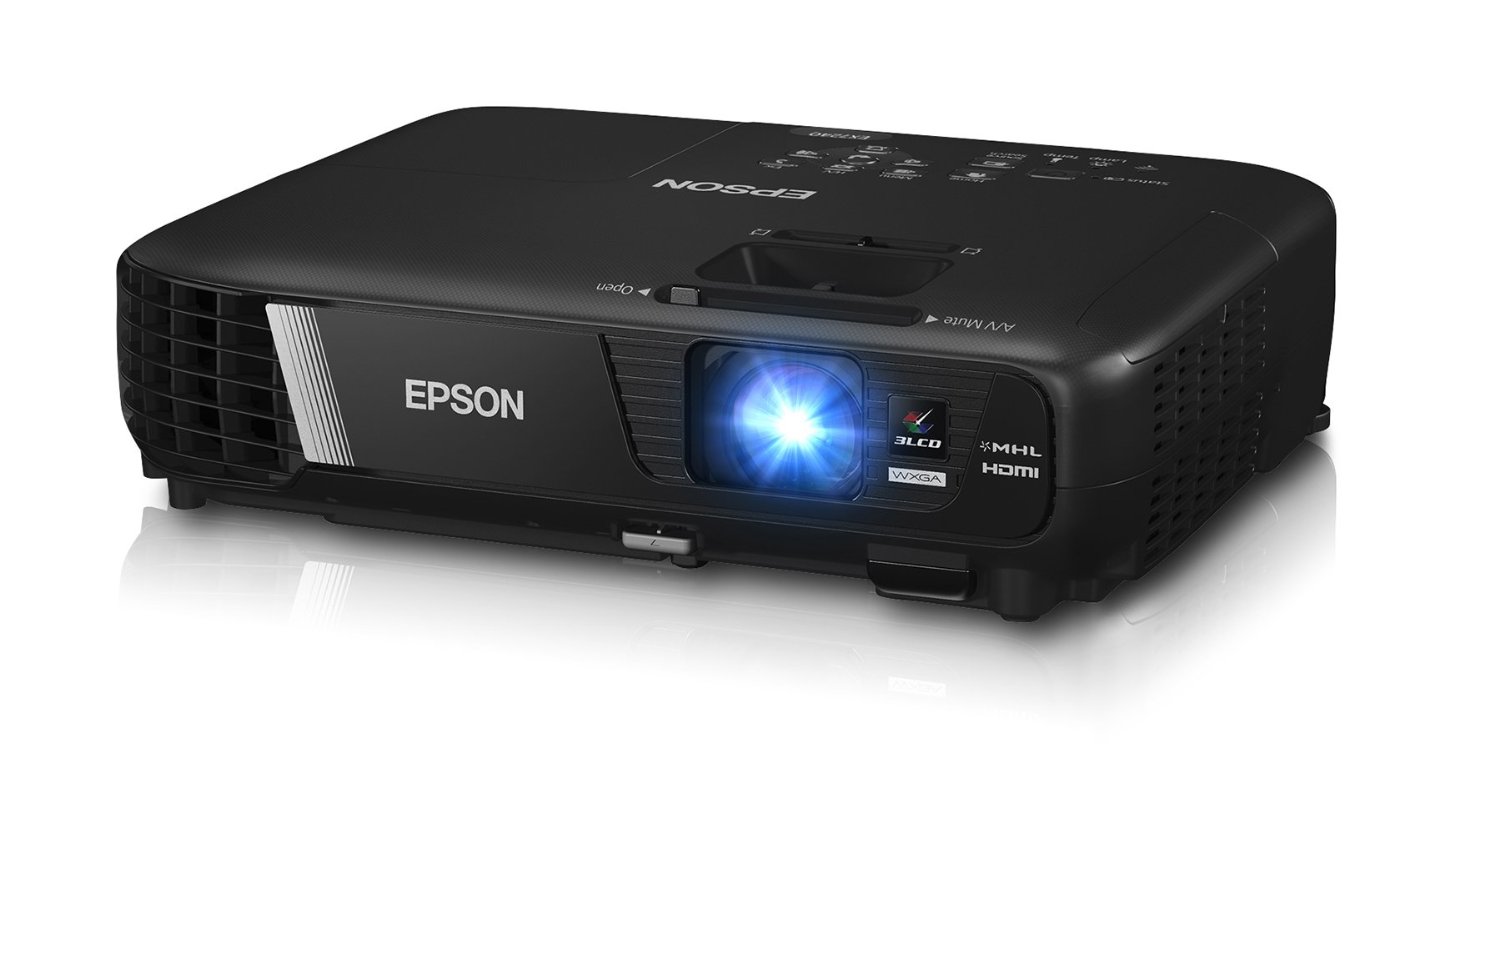 Epson Ex7240 Pro Wireless Wxga 3lcd Hd Projector 3200 Lumens Hdmi Mhl Svga Ebay 5566